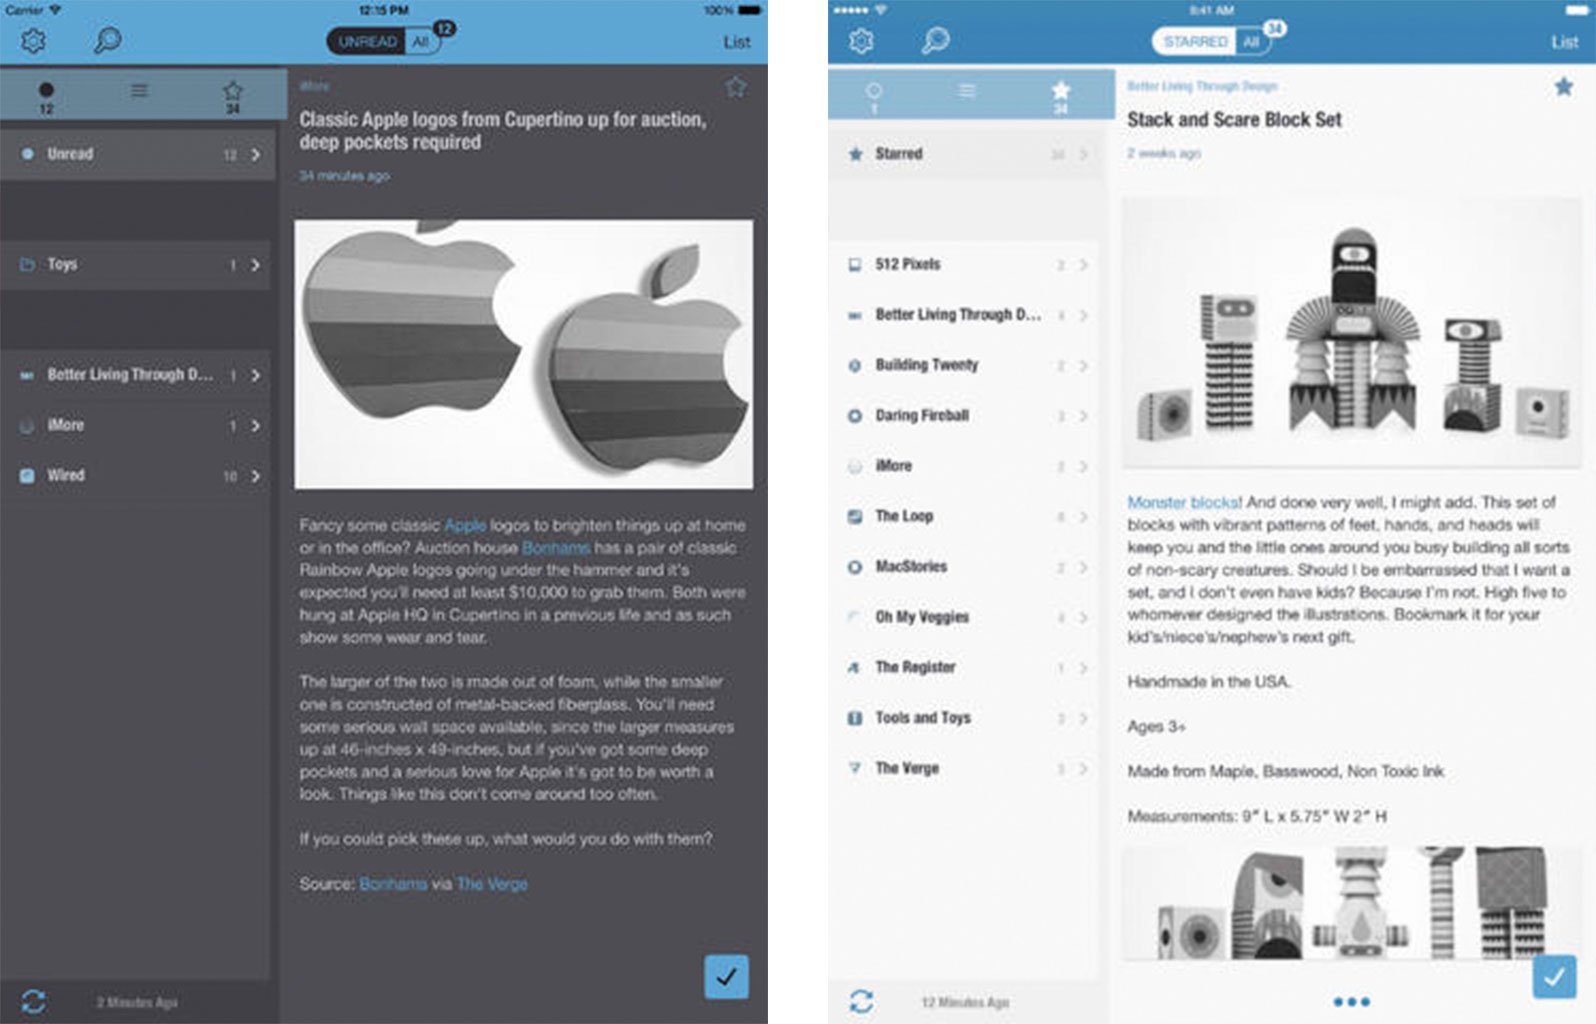 Best news reader apps for iPad: Reconnaissance